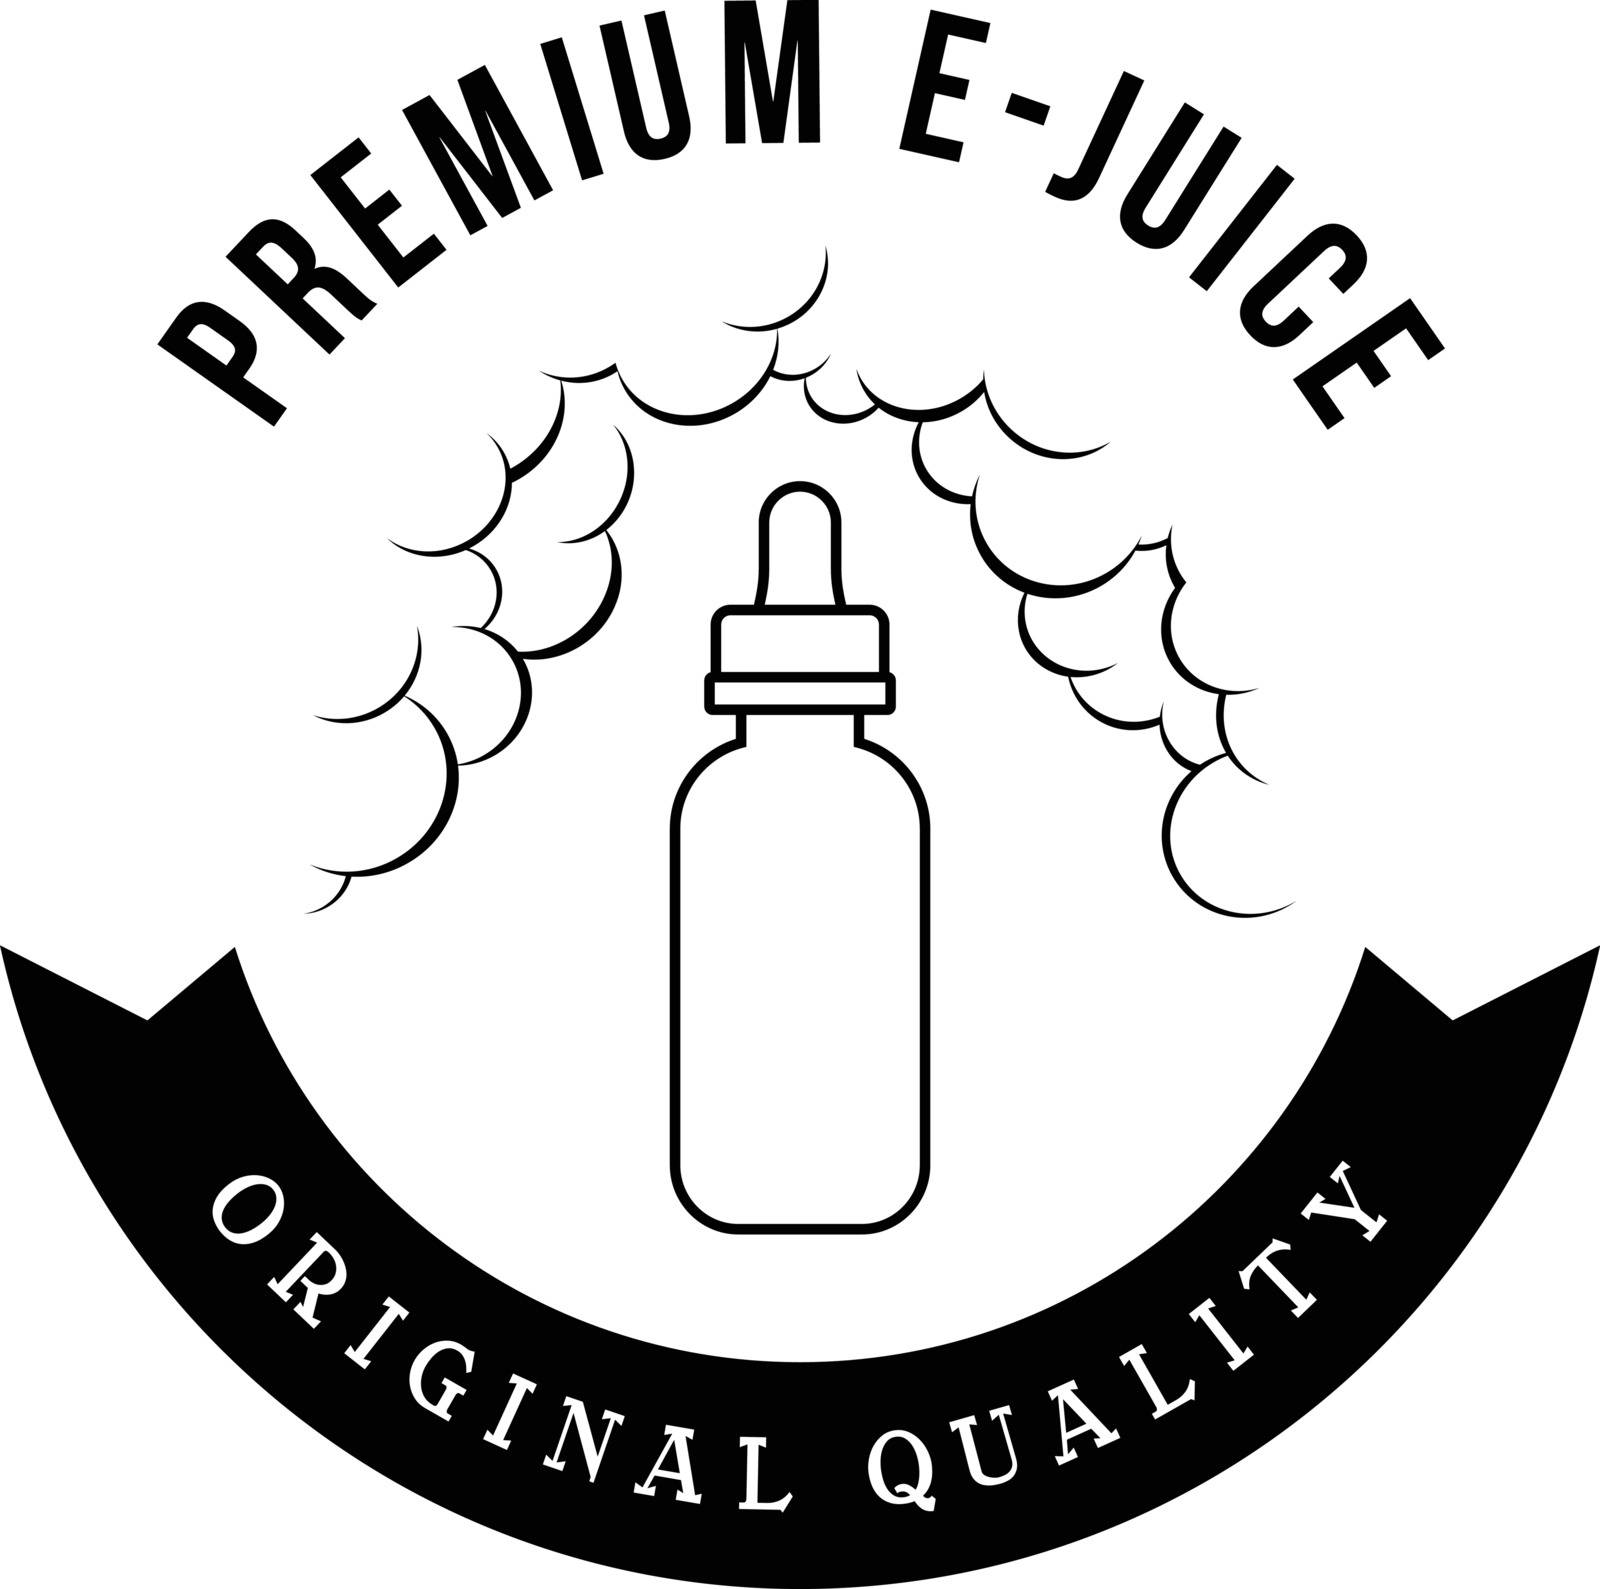 personal vaporizer e-cigarette e-juice liquid vector art